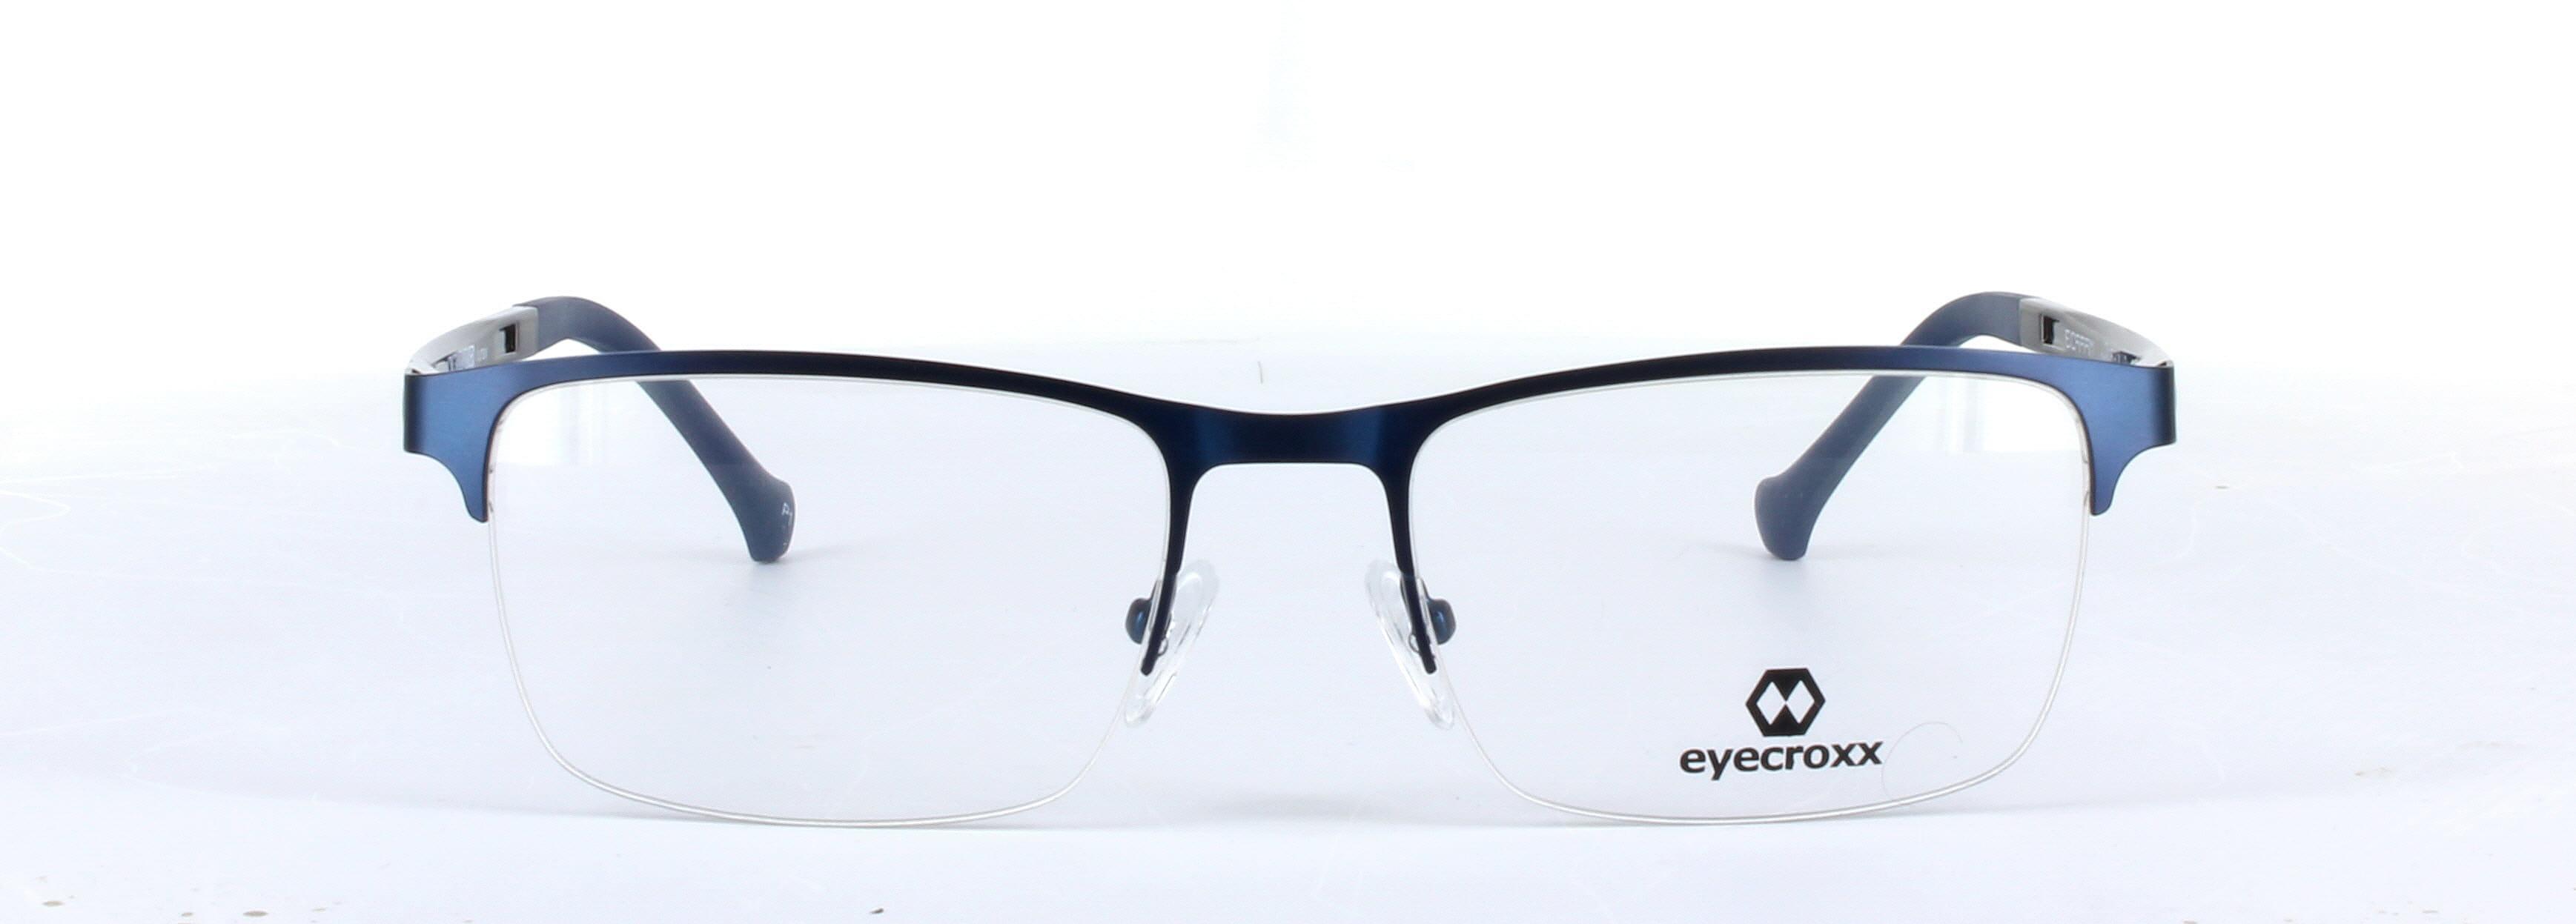 Eyecroxx 555 Blue Semi Rimless Metal Glasses - Image View 5